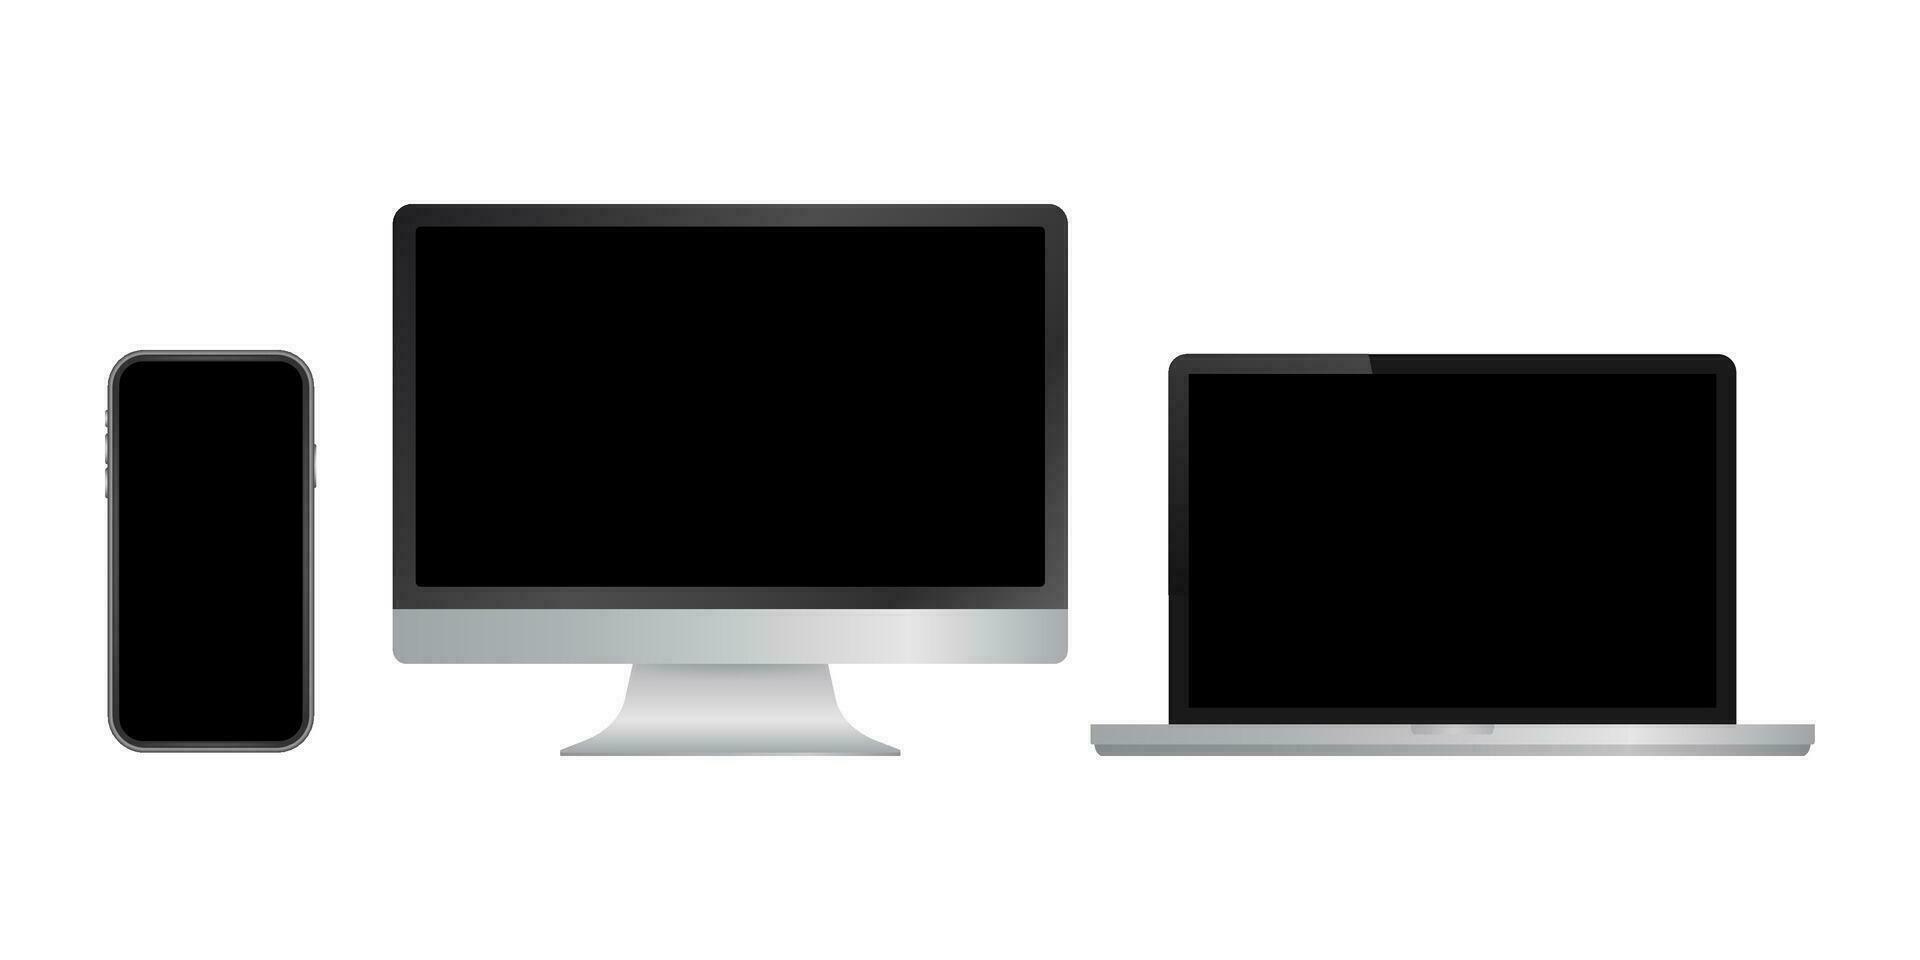 realista computadora ordenador portátil teléfono inteligente y tableta. monitor pantalla monitor modelo. vector valores ilustración